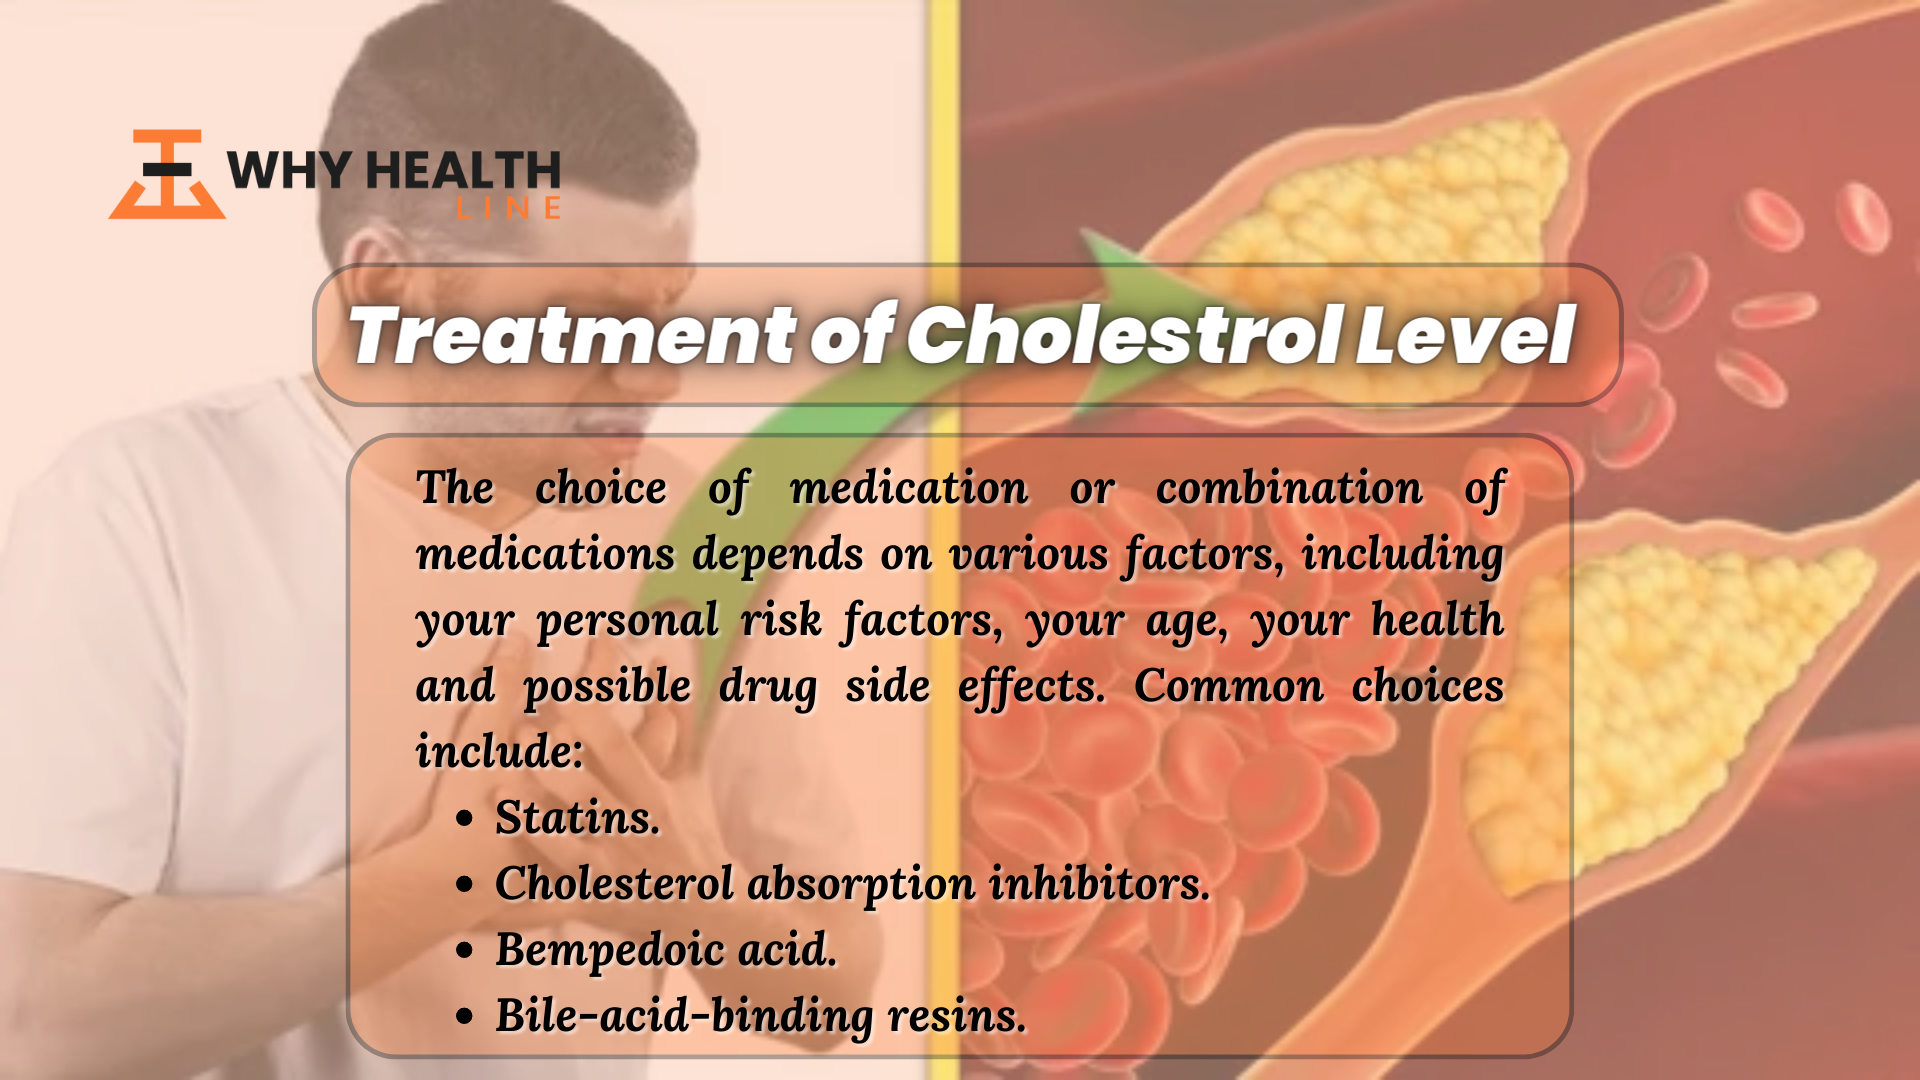 Treatment of Cholestrol Level